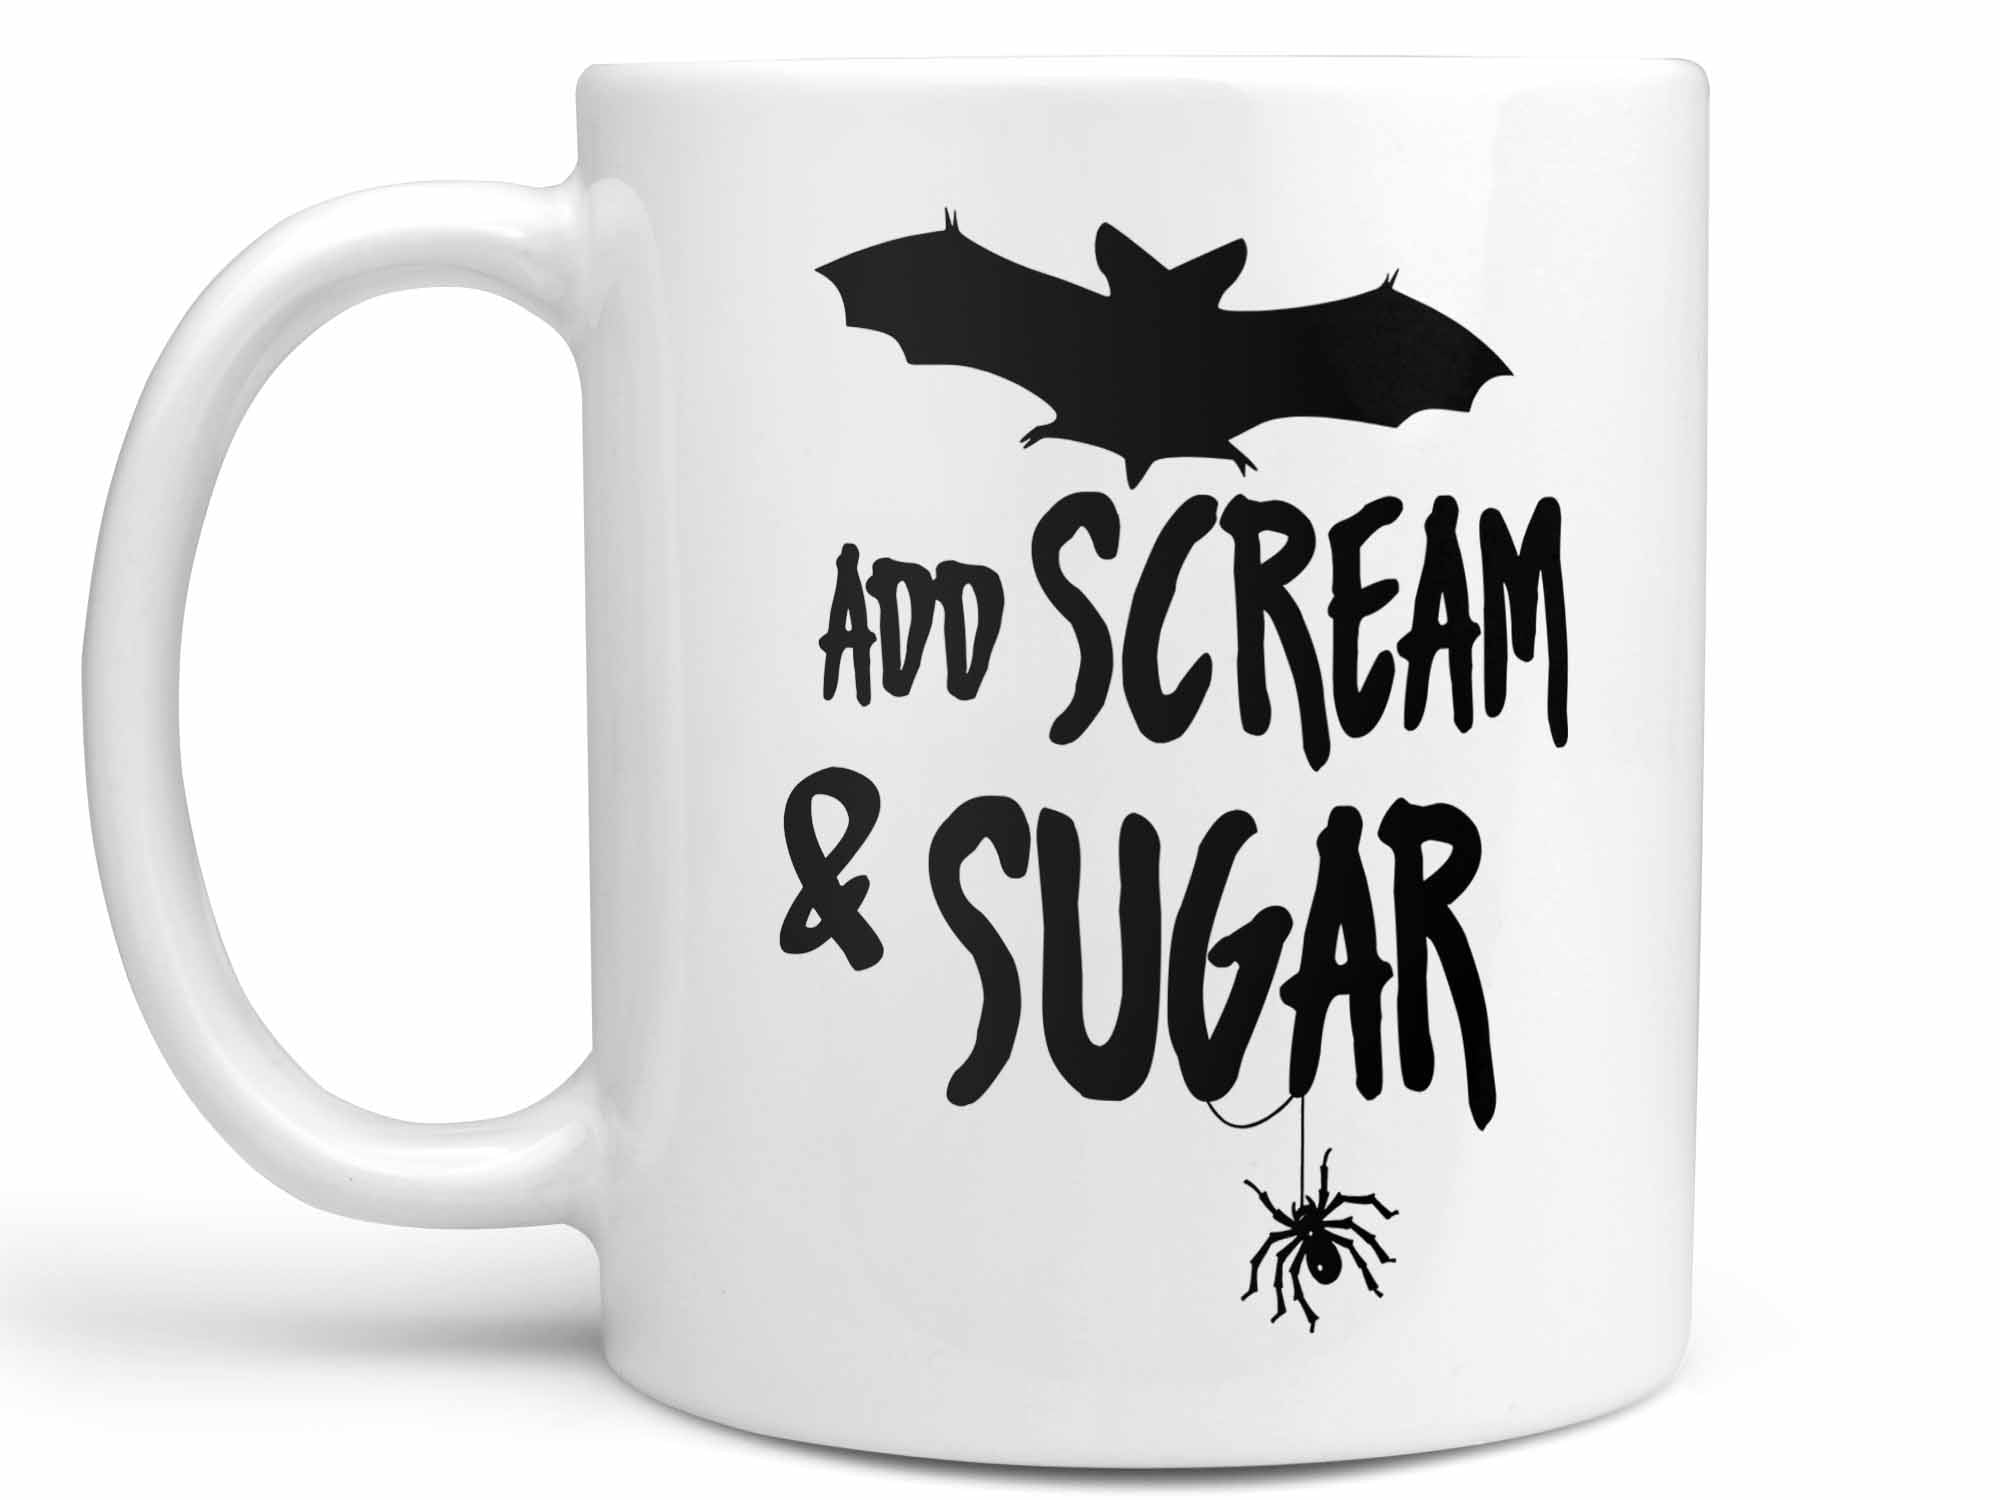 Add Scream & Sugar Coffee Mug,Coffee Mugs Never Lie,Coffee Mug